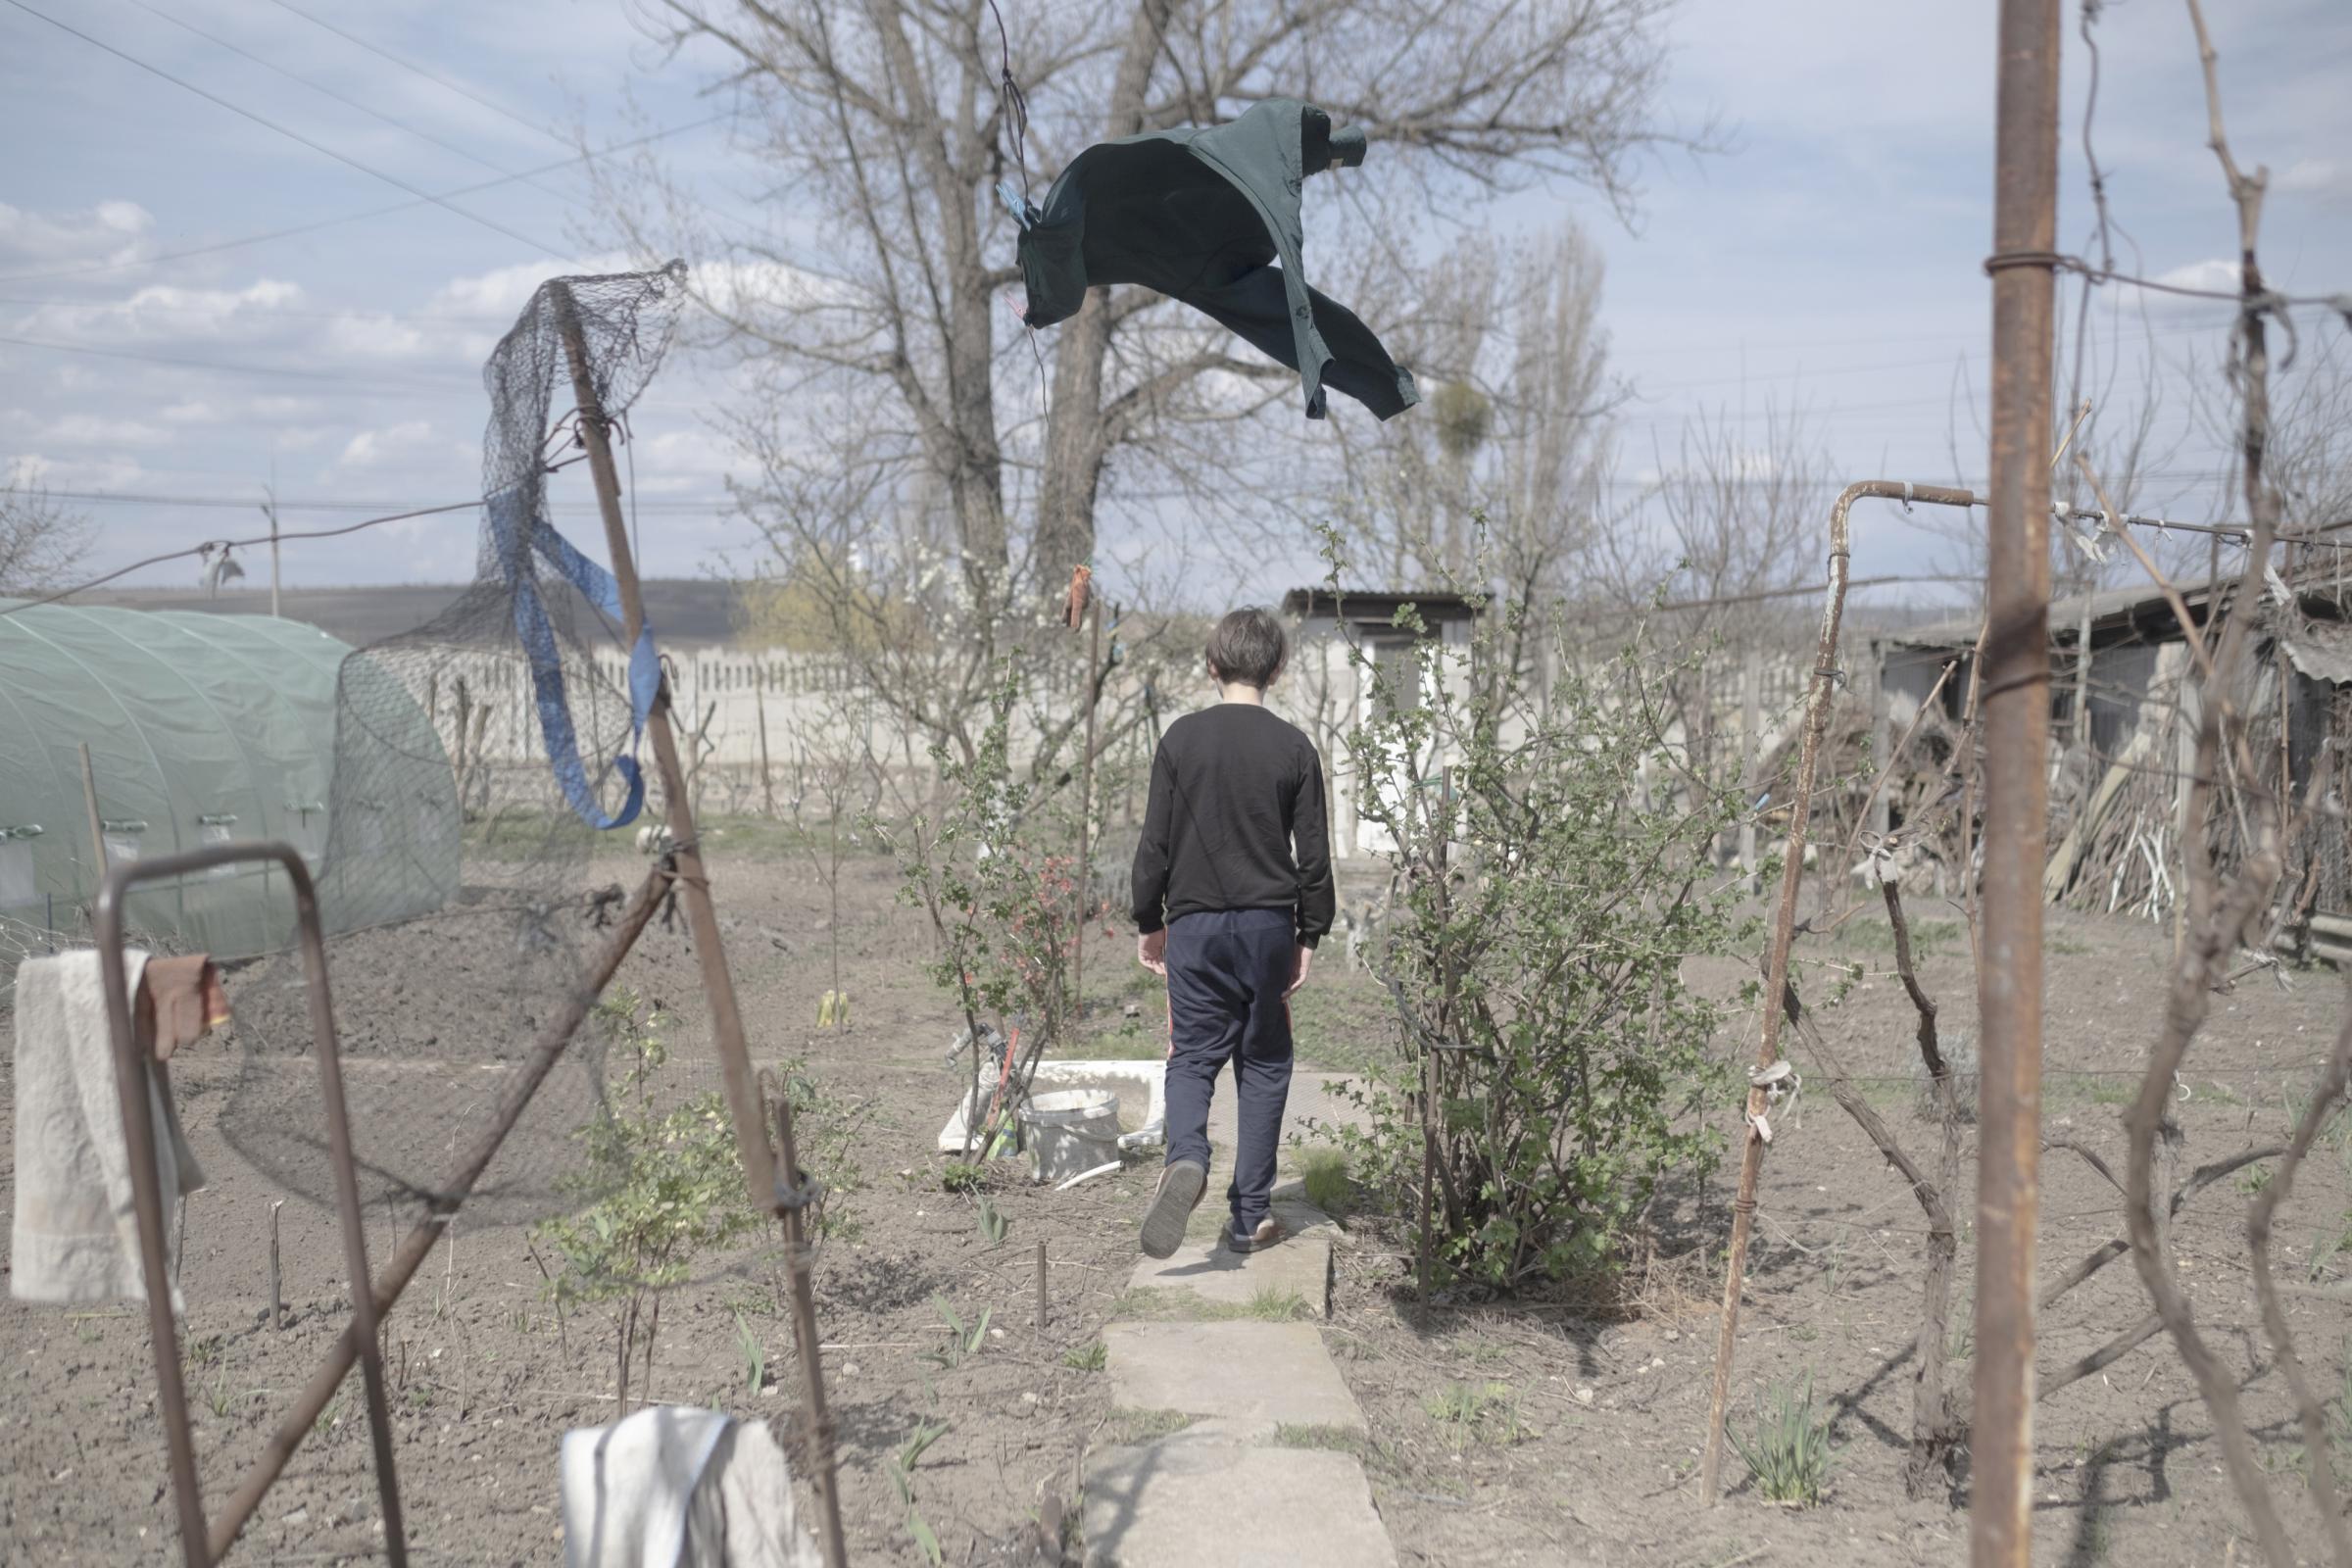 Moldovans who sheltered Ukrainian refugees at home - Yarik in the garden.